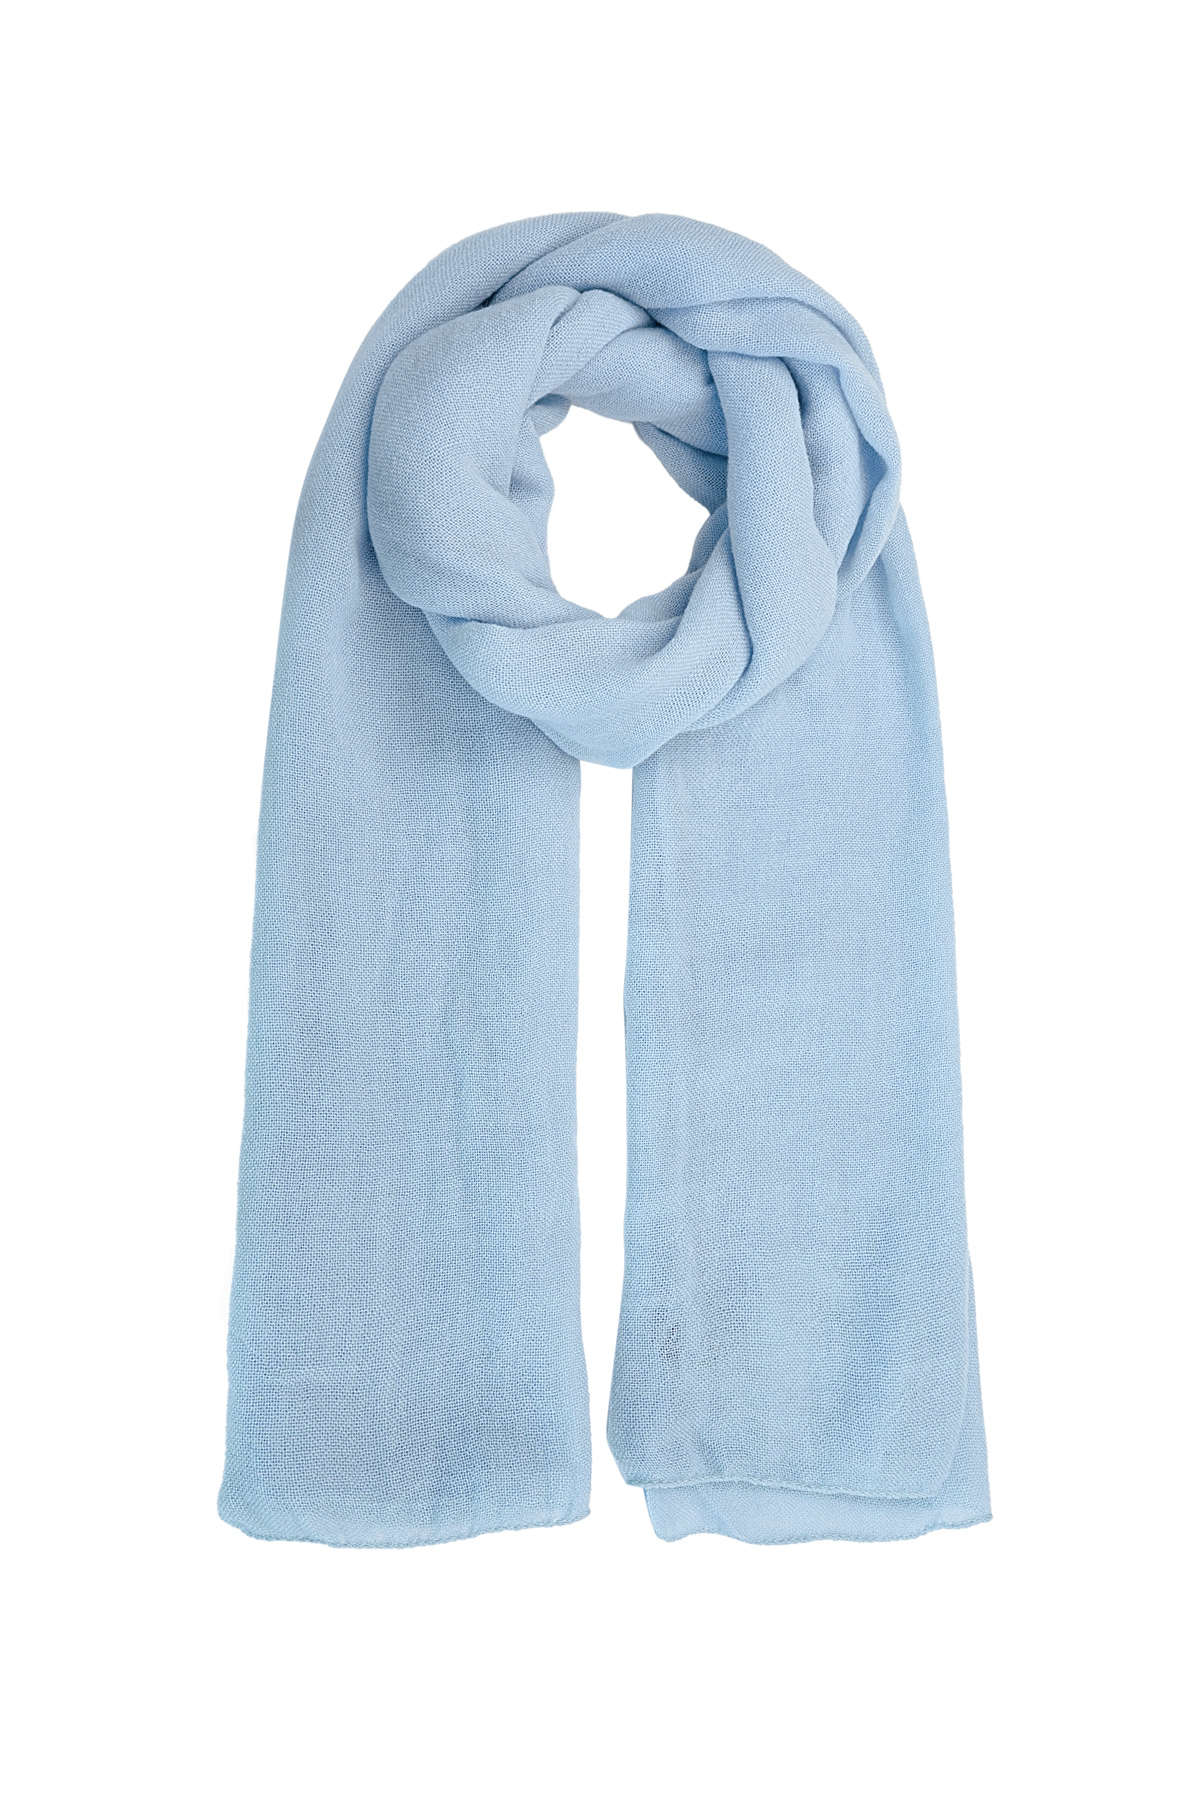 Bufanda color liso - azul claro h5 